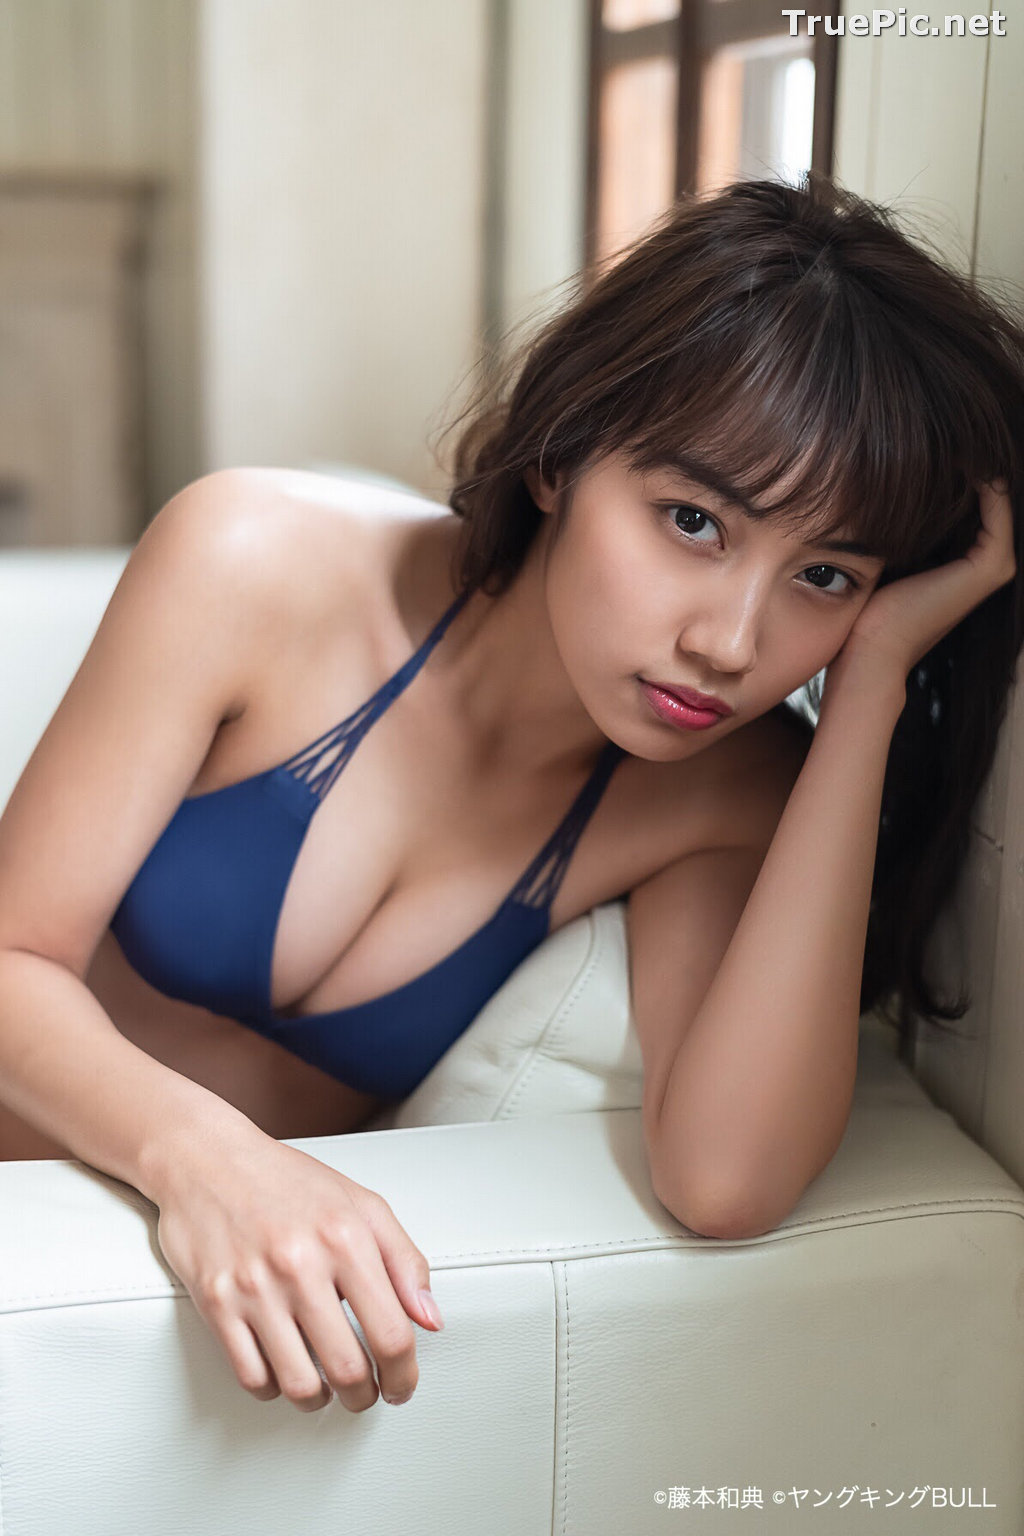 Image Japanese Actress and Model – Hikari Kuroki (黒木ひかり) – Sexy Picture Collection 2021 - TruePic.net - Picture-189